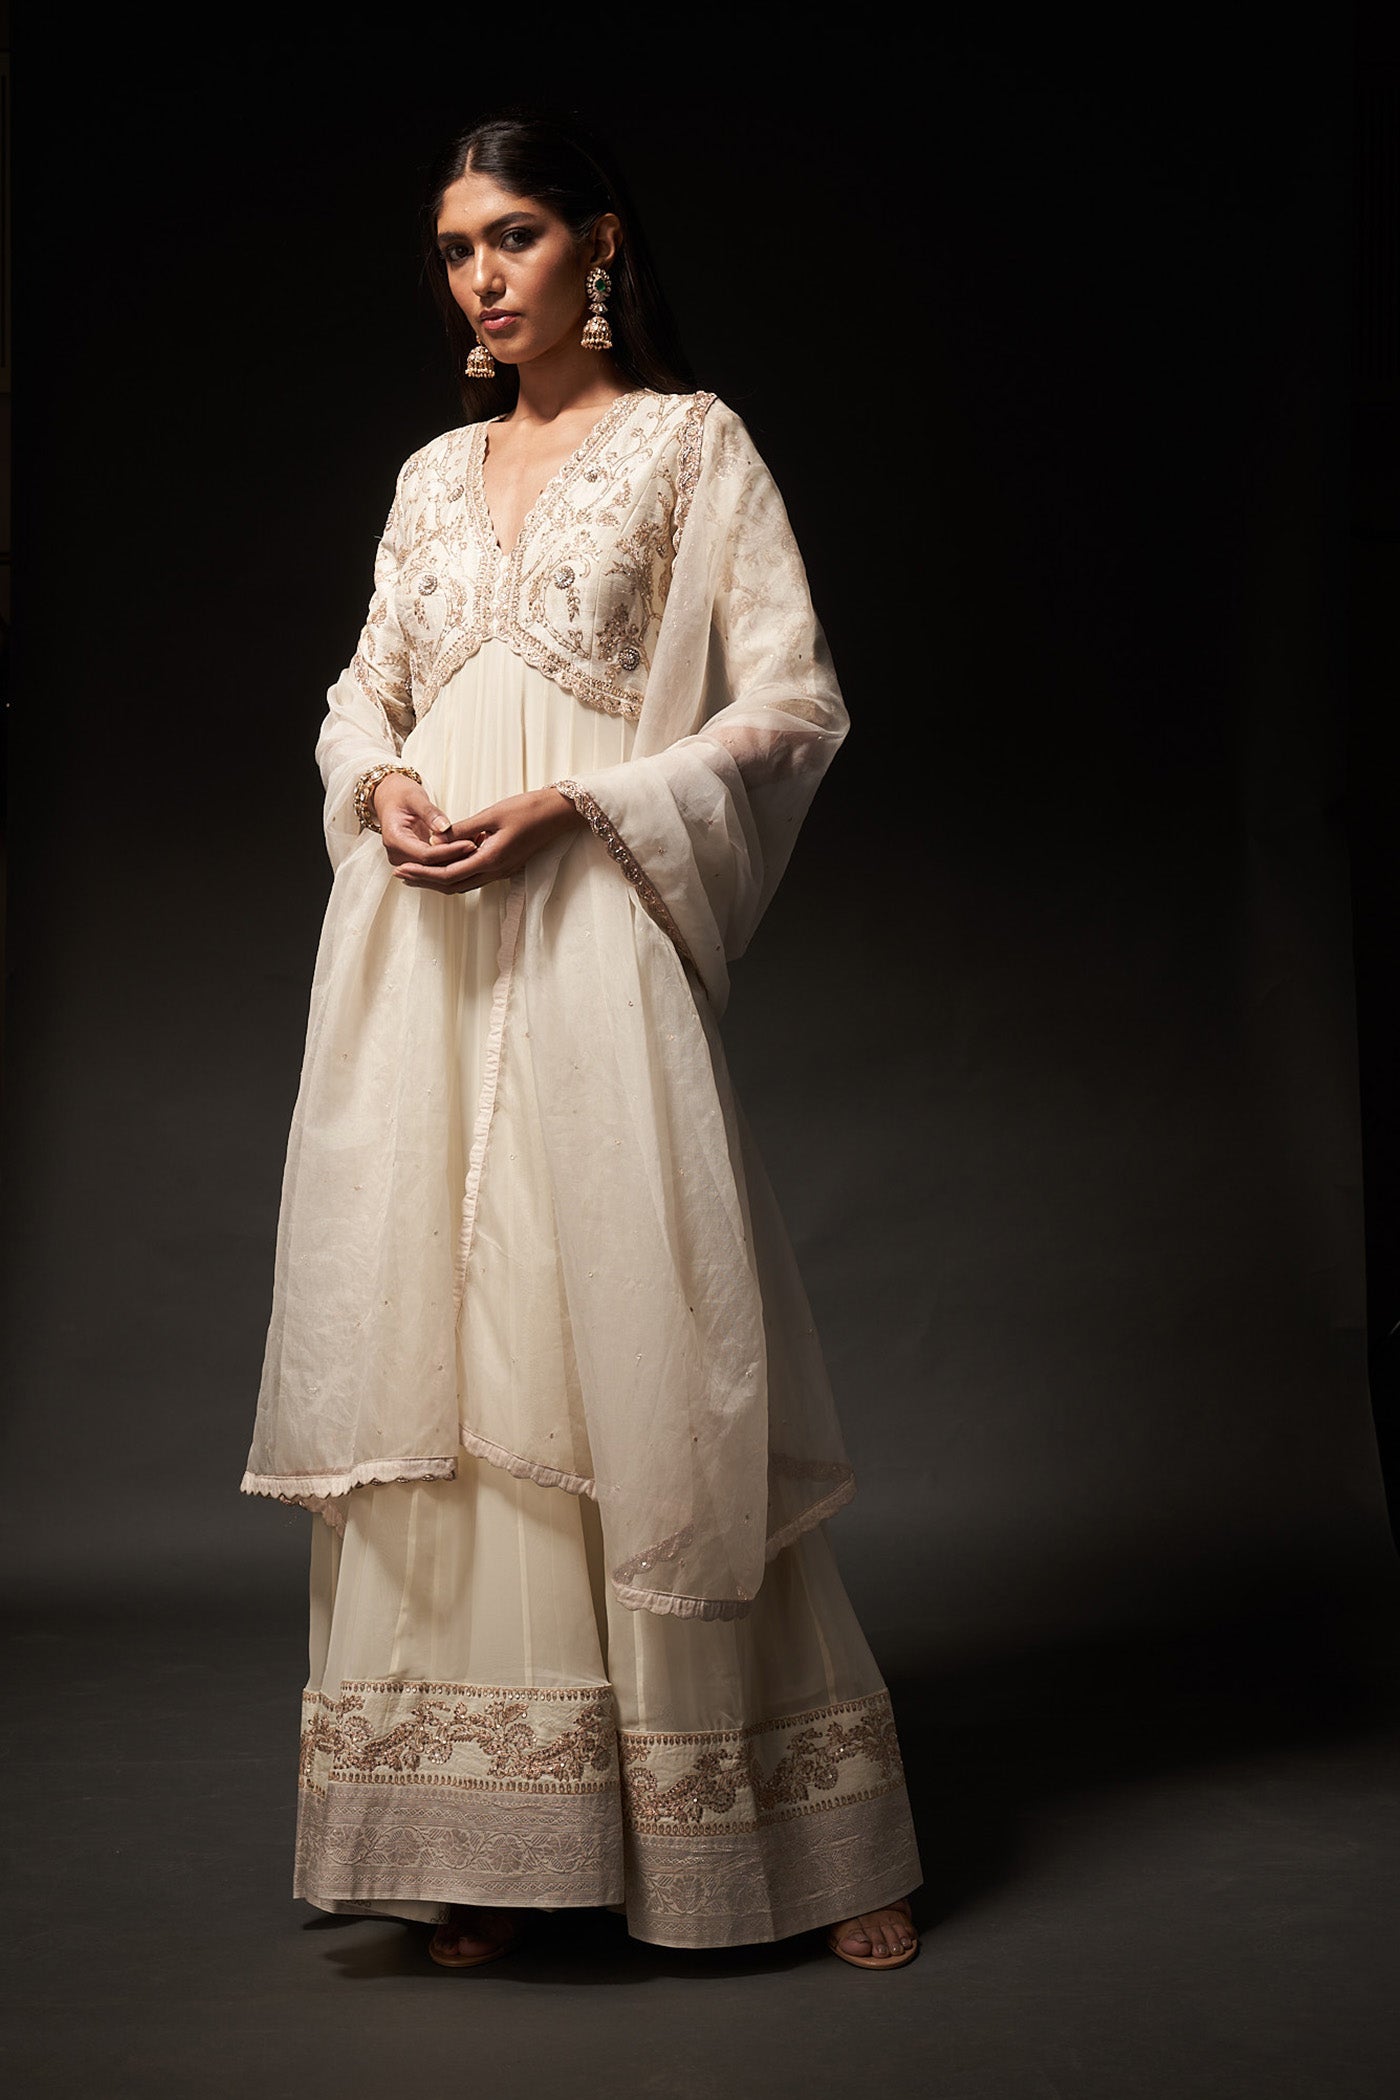 Mandakini Dress - Cream embroidered dress